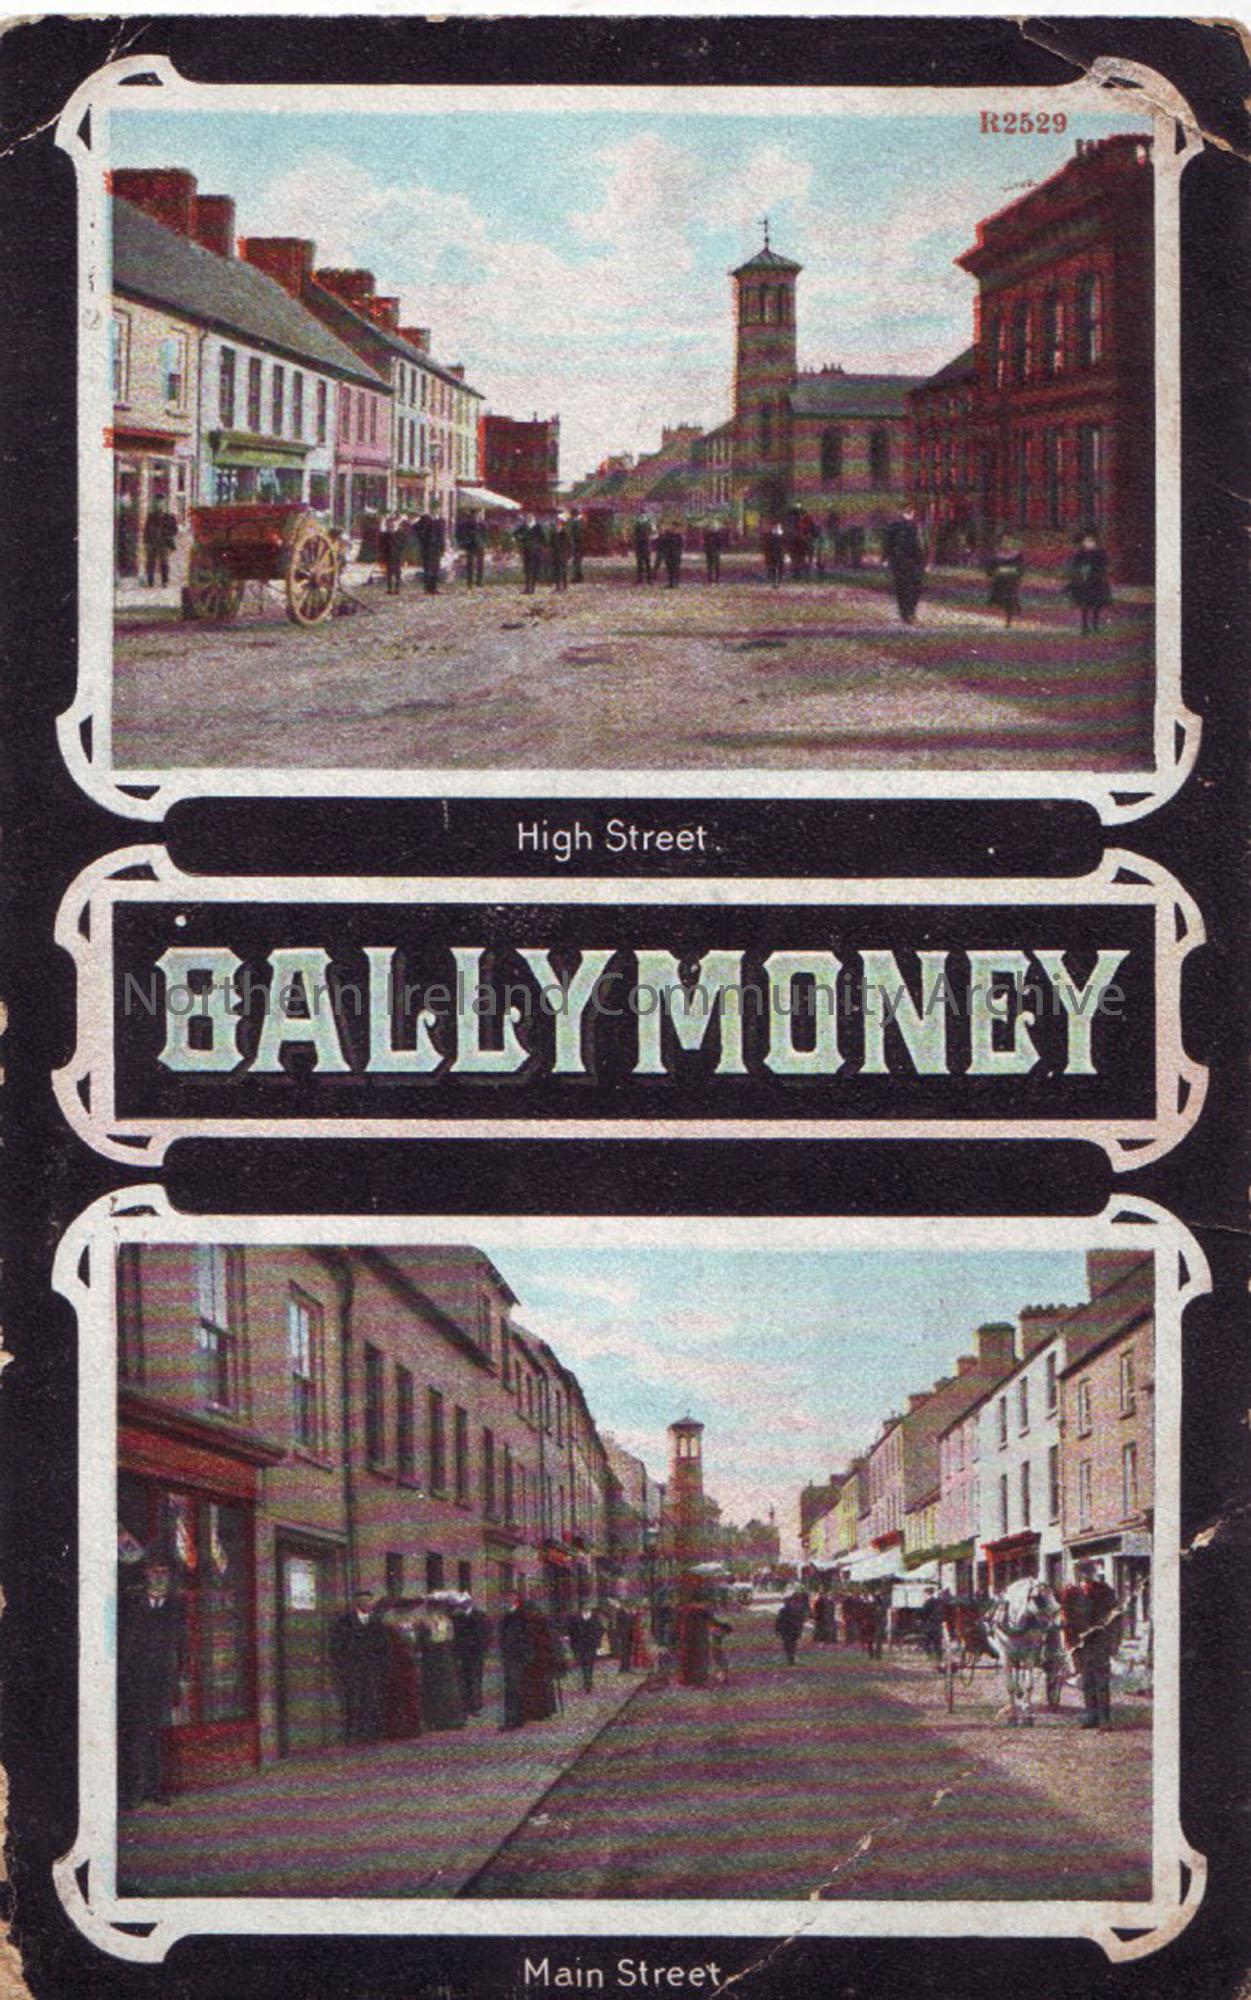 High Street, Ballymoney. Two photographs on black background